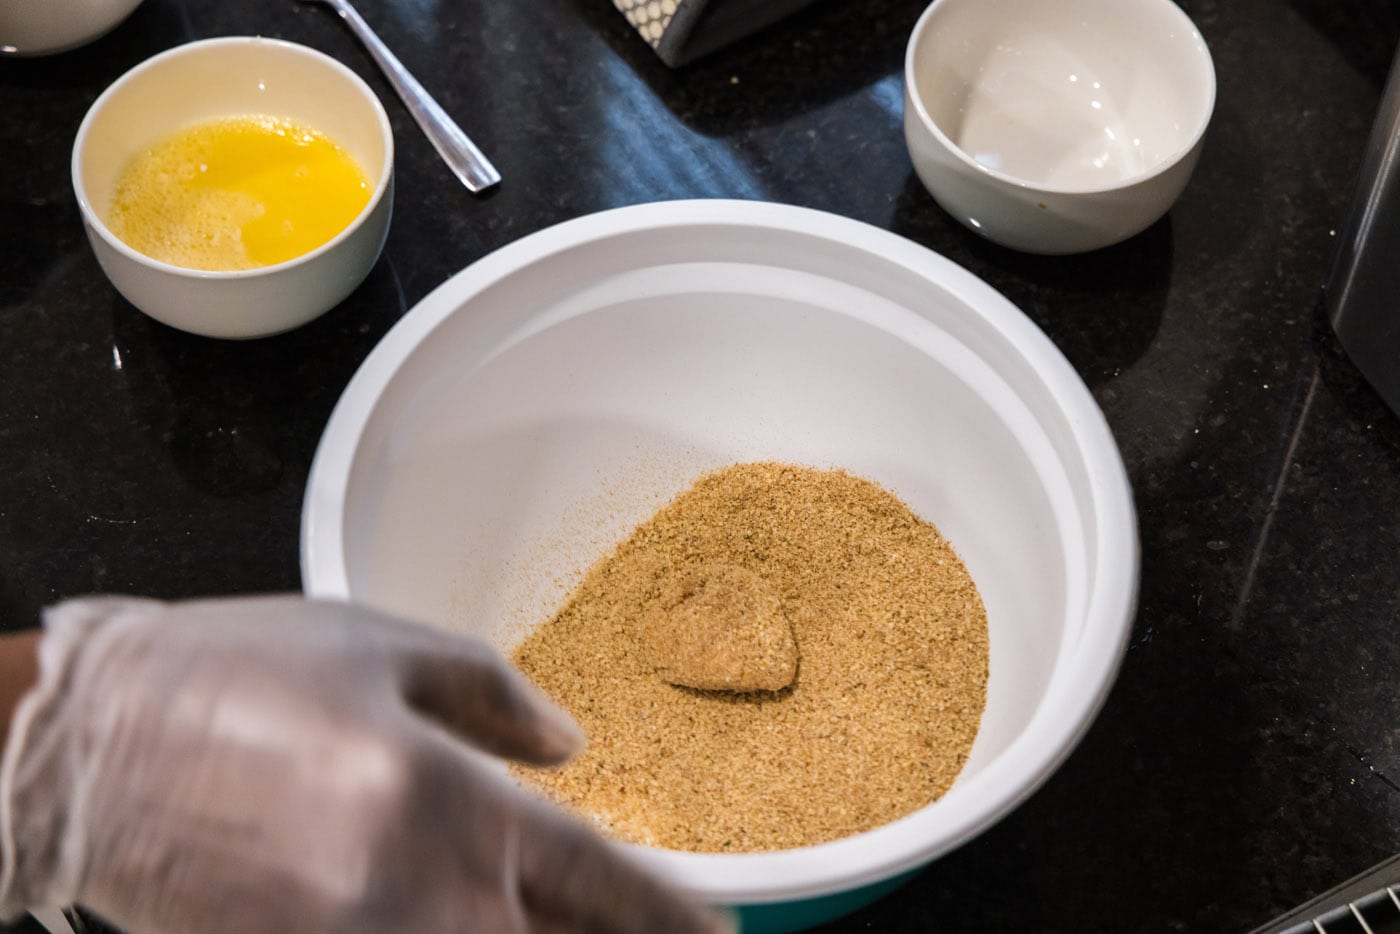 coating flour dredged scallop in breadcrumb mixture